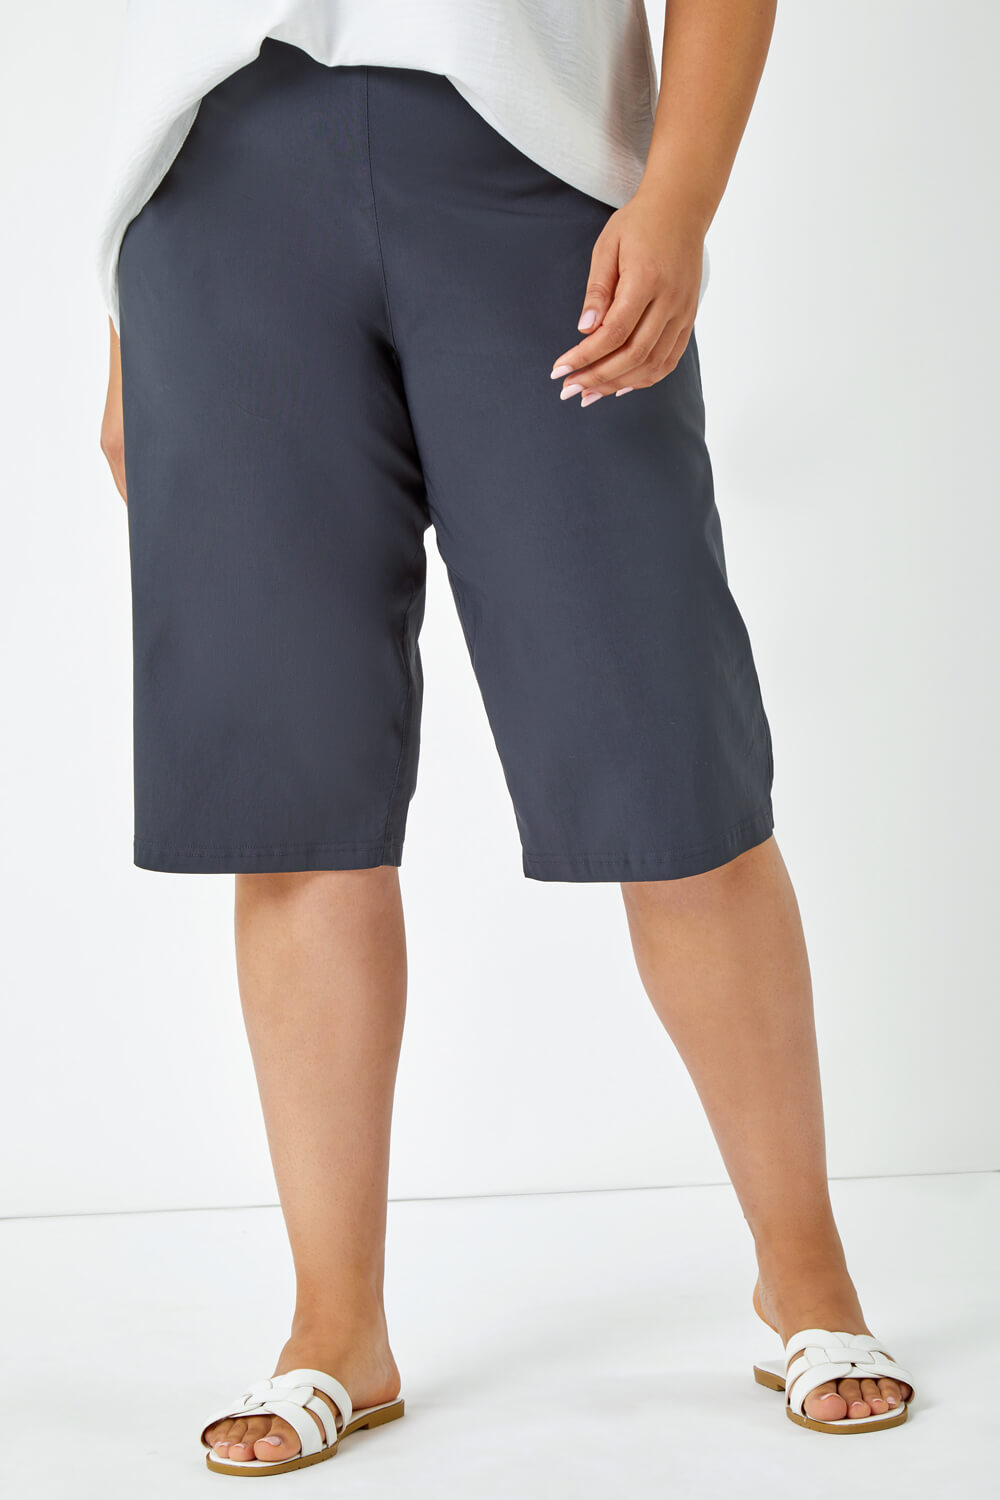 Dark Grey Curve Knee Length Stretch Shorts, Image 4 of 5